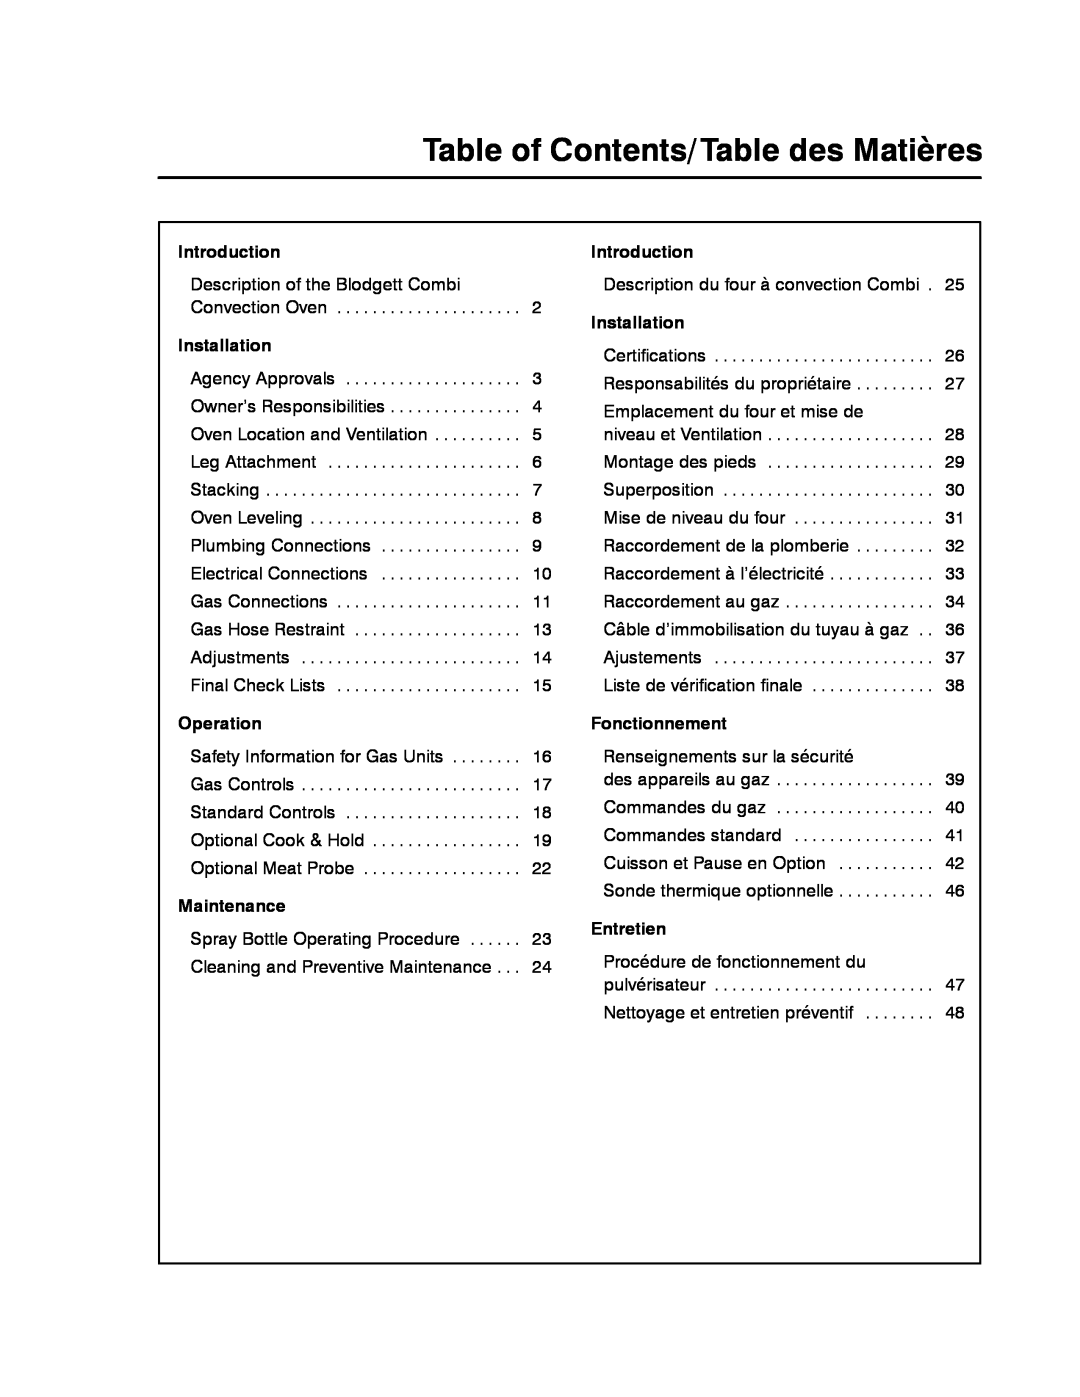 Blodgett CNV14E Table of Contents/Table des Matières, Introduction, Installation, Operation, Maintenance, Fonctionnement 